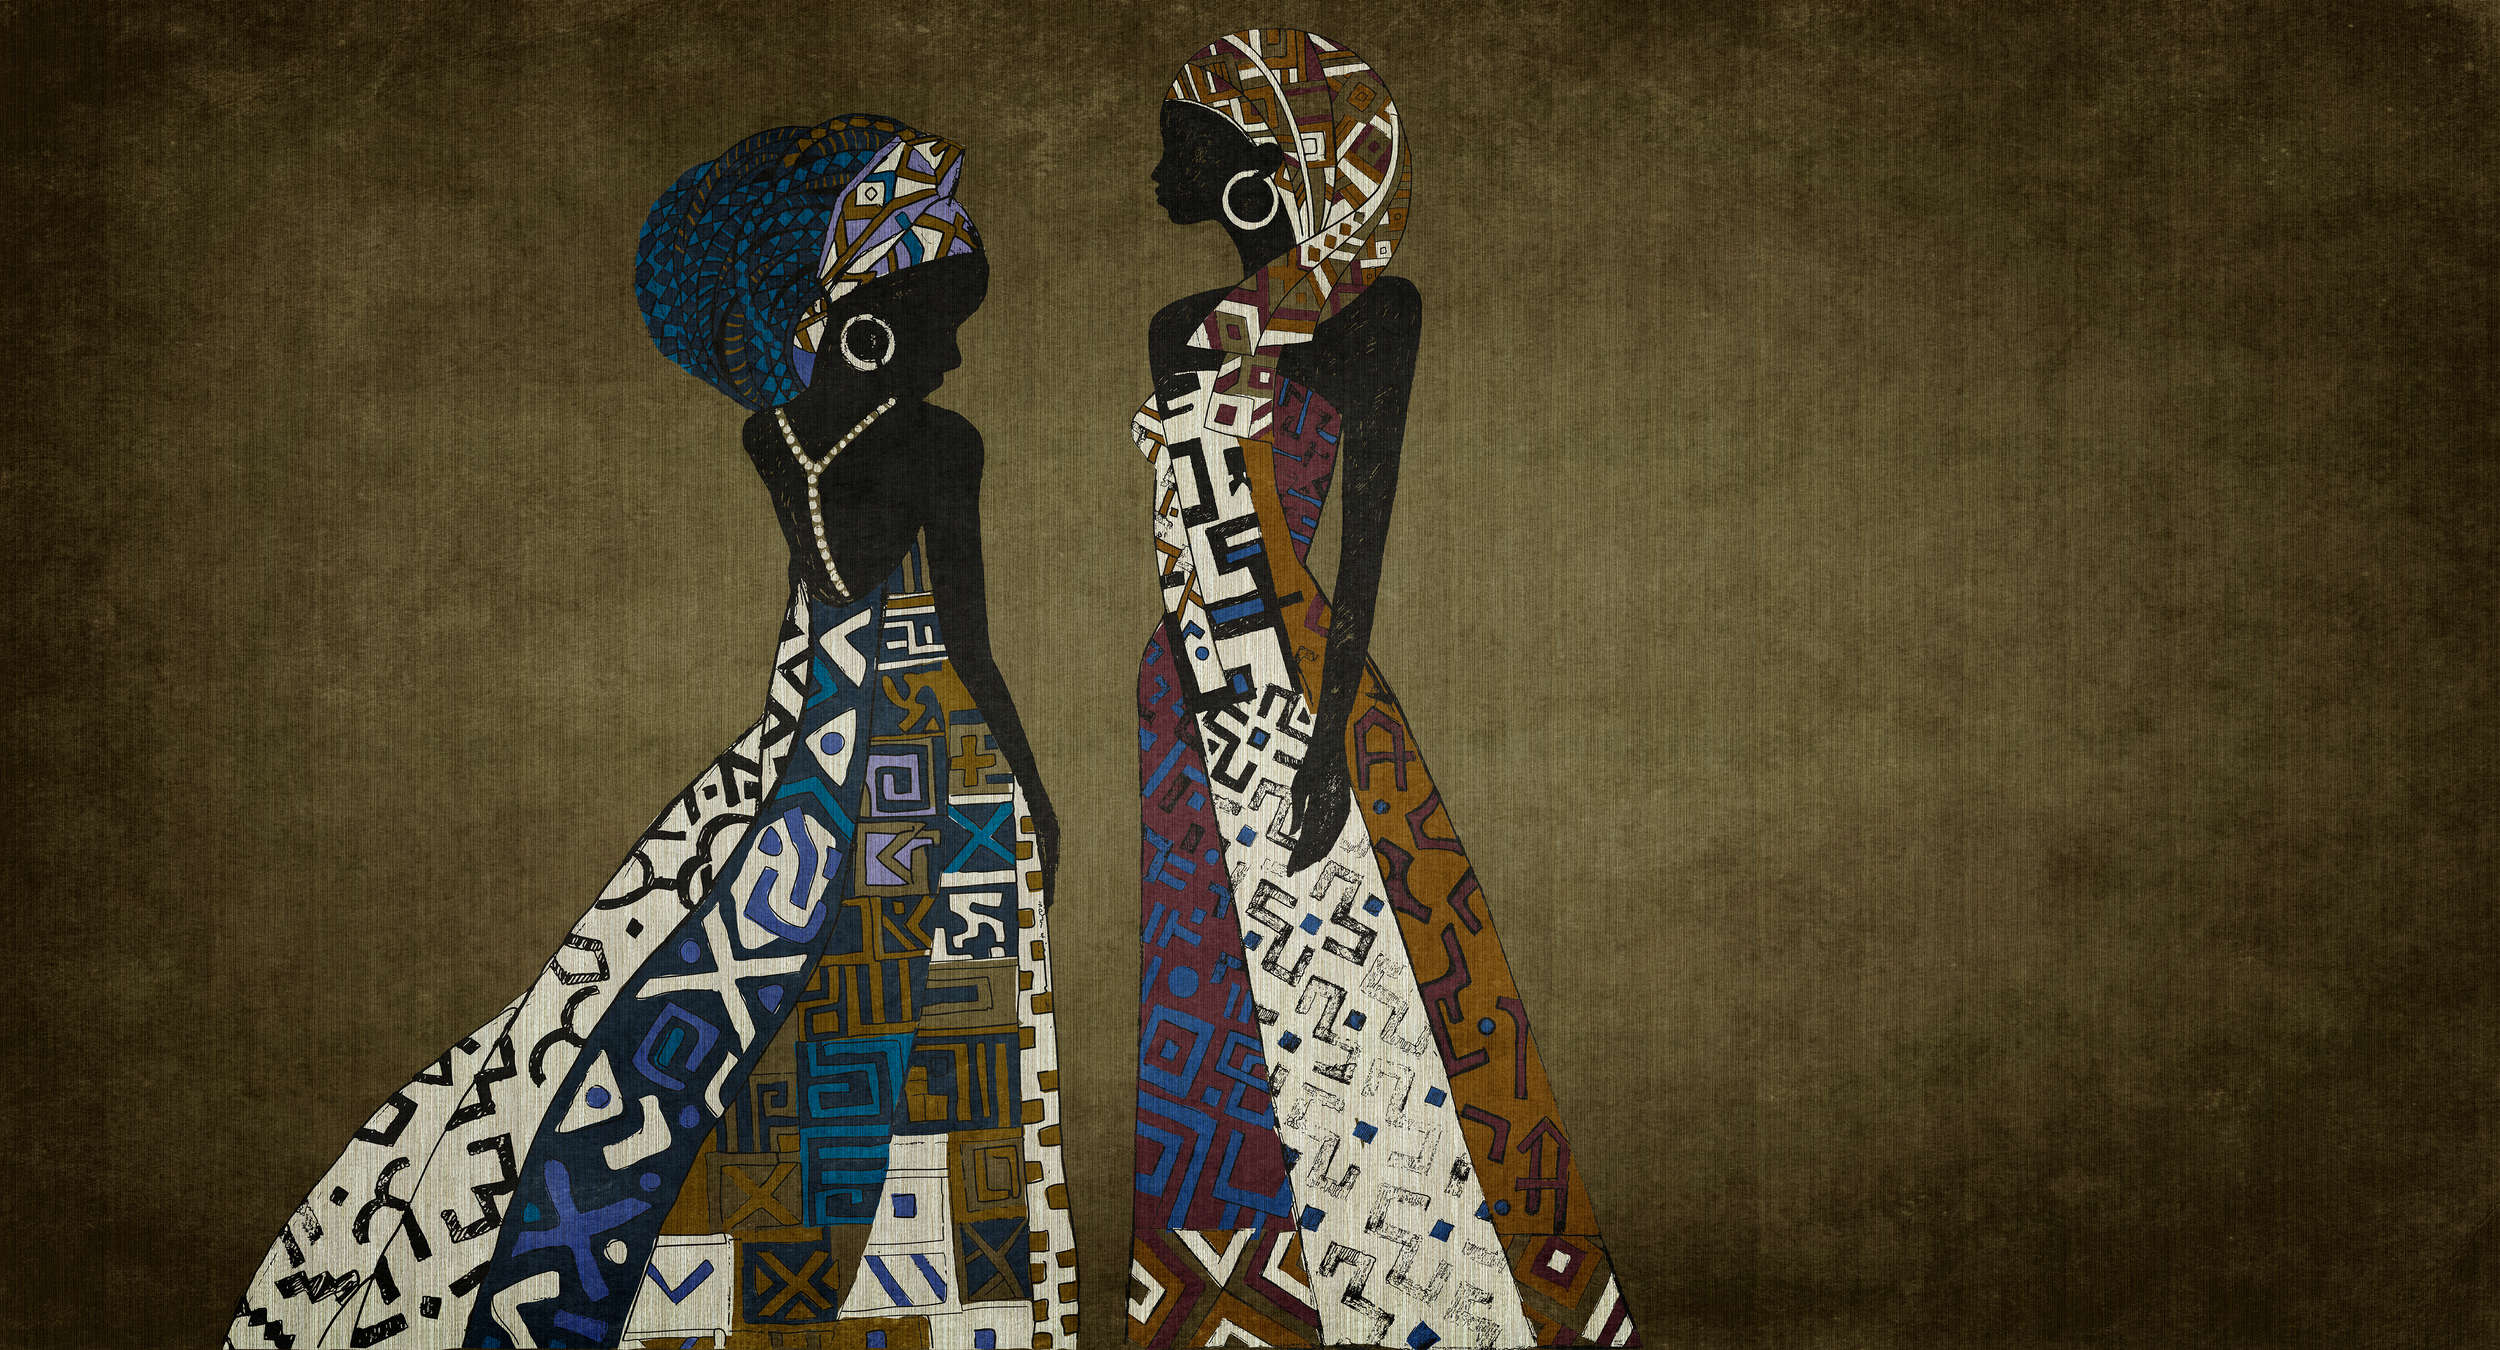             Nairobi 3 – Afrika Fototapete Dress Design mit Ethno Muster
        